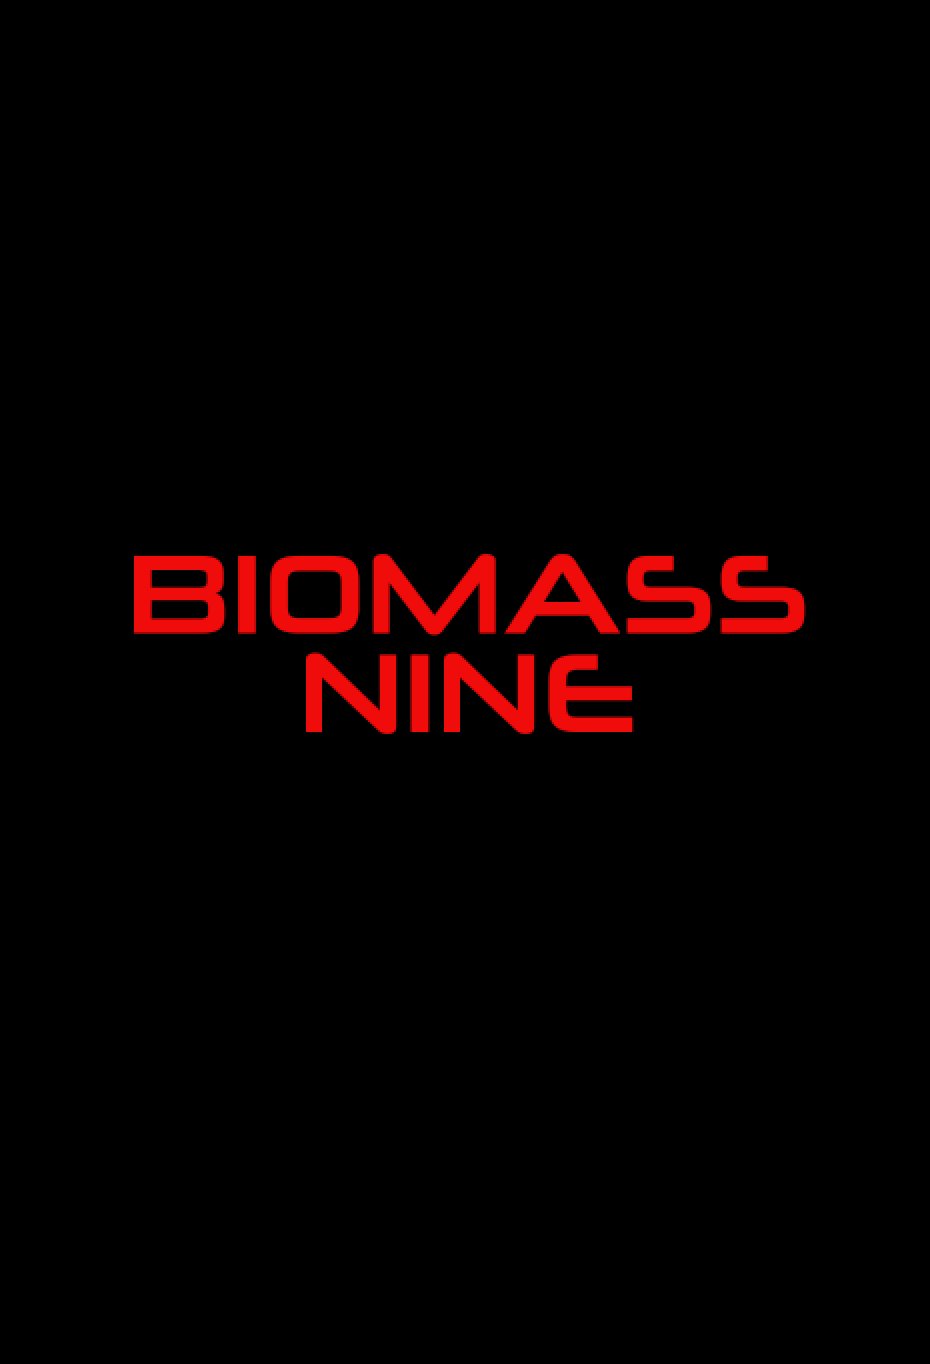 Biomass Nine